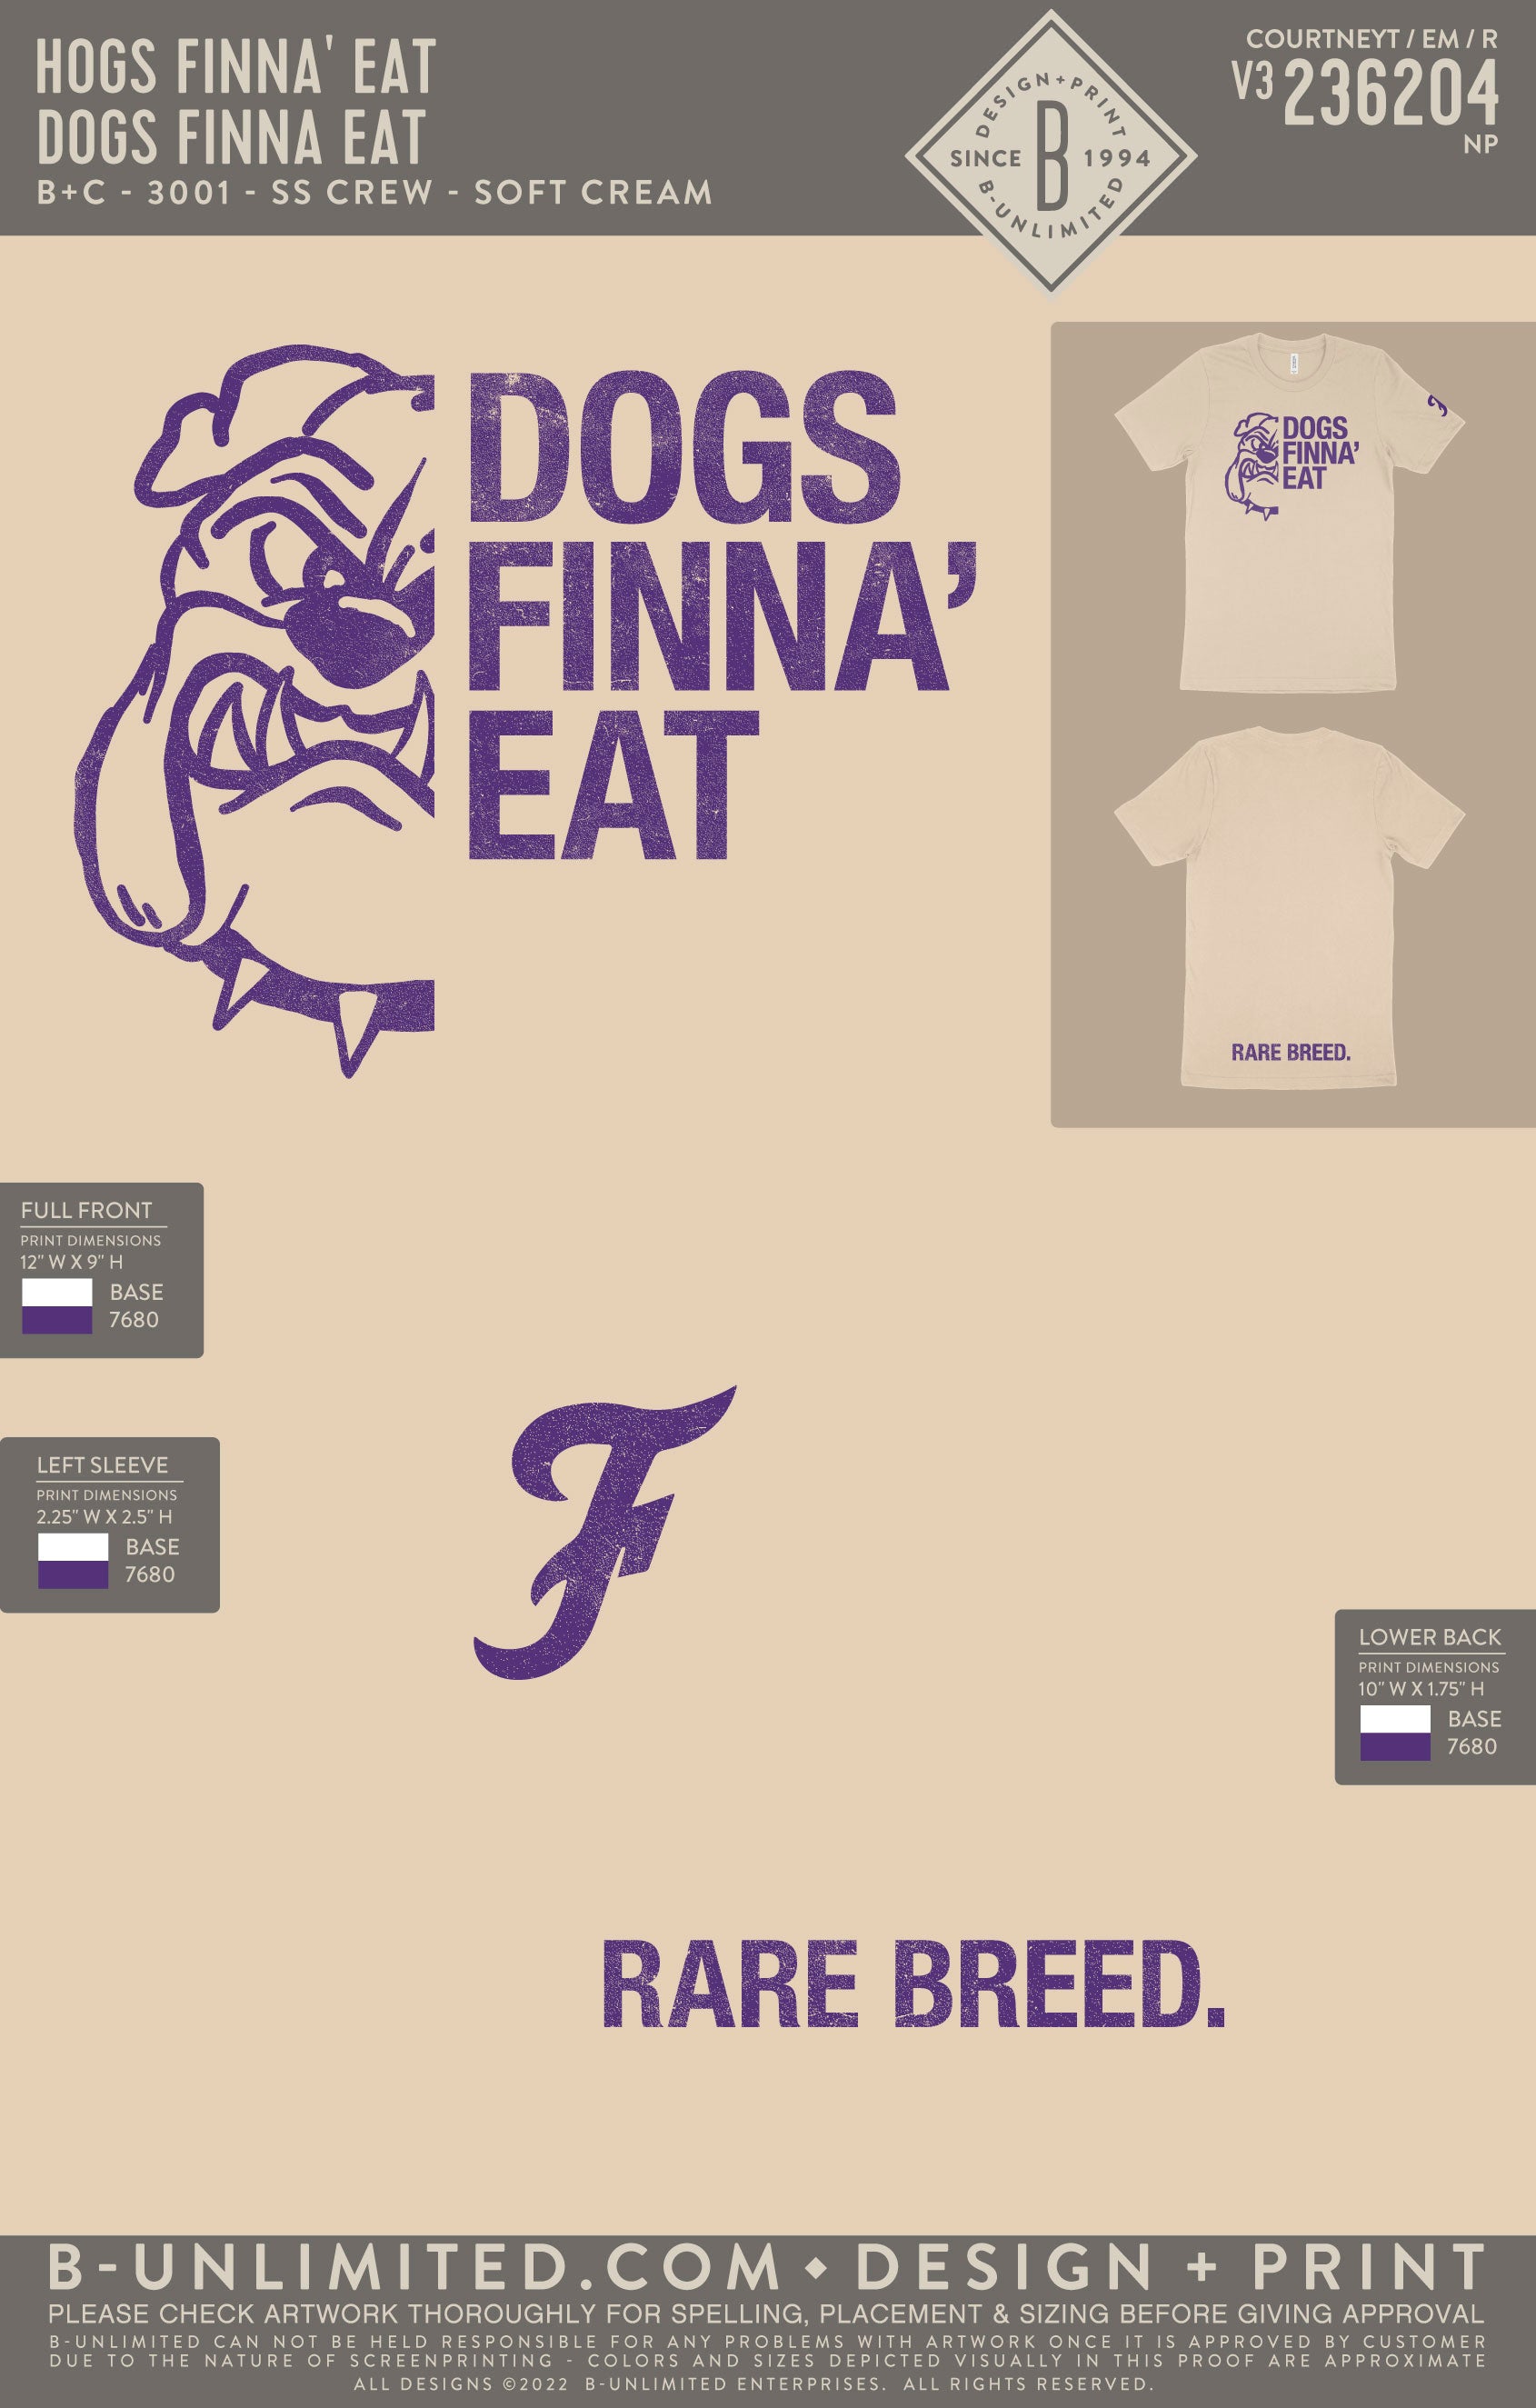 Hogs Finna' Eat - Dogs Finna Eat - B+C - 3001 - SS Crew - Soft Cream